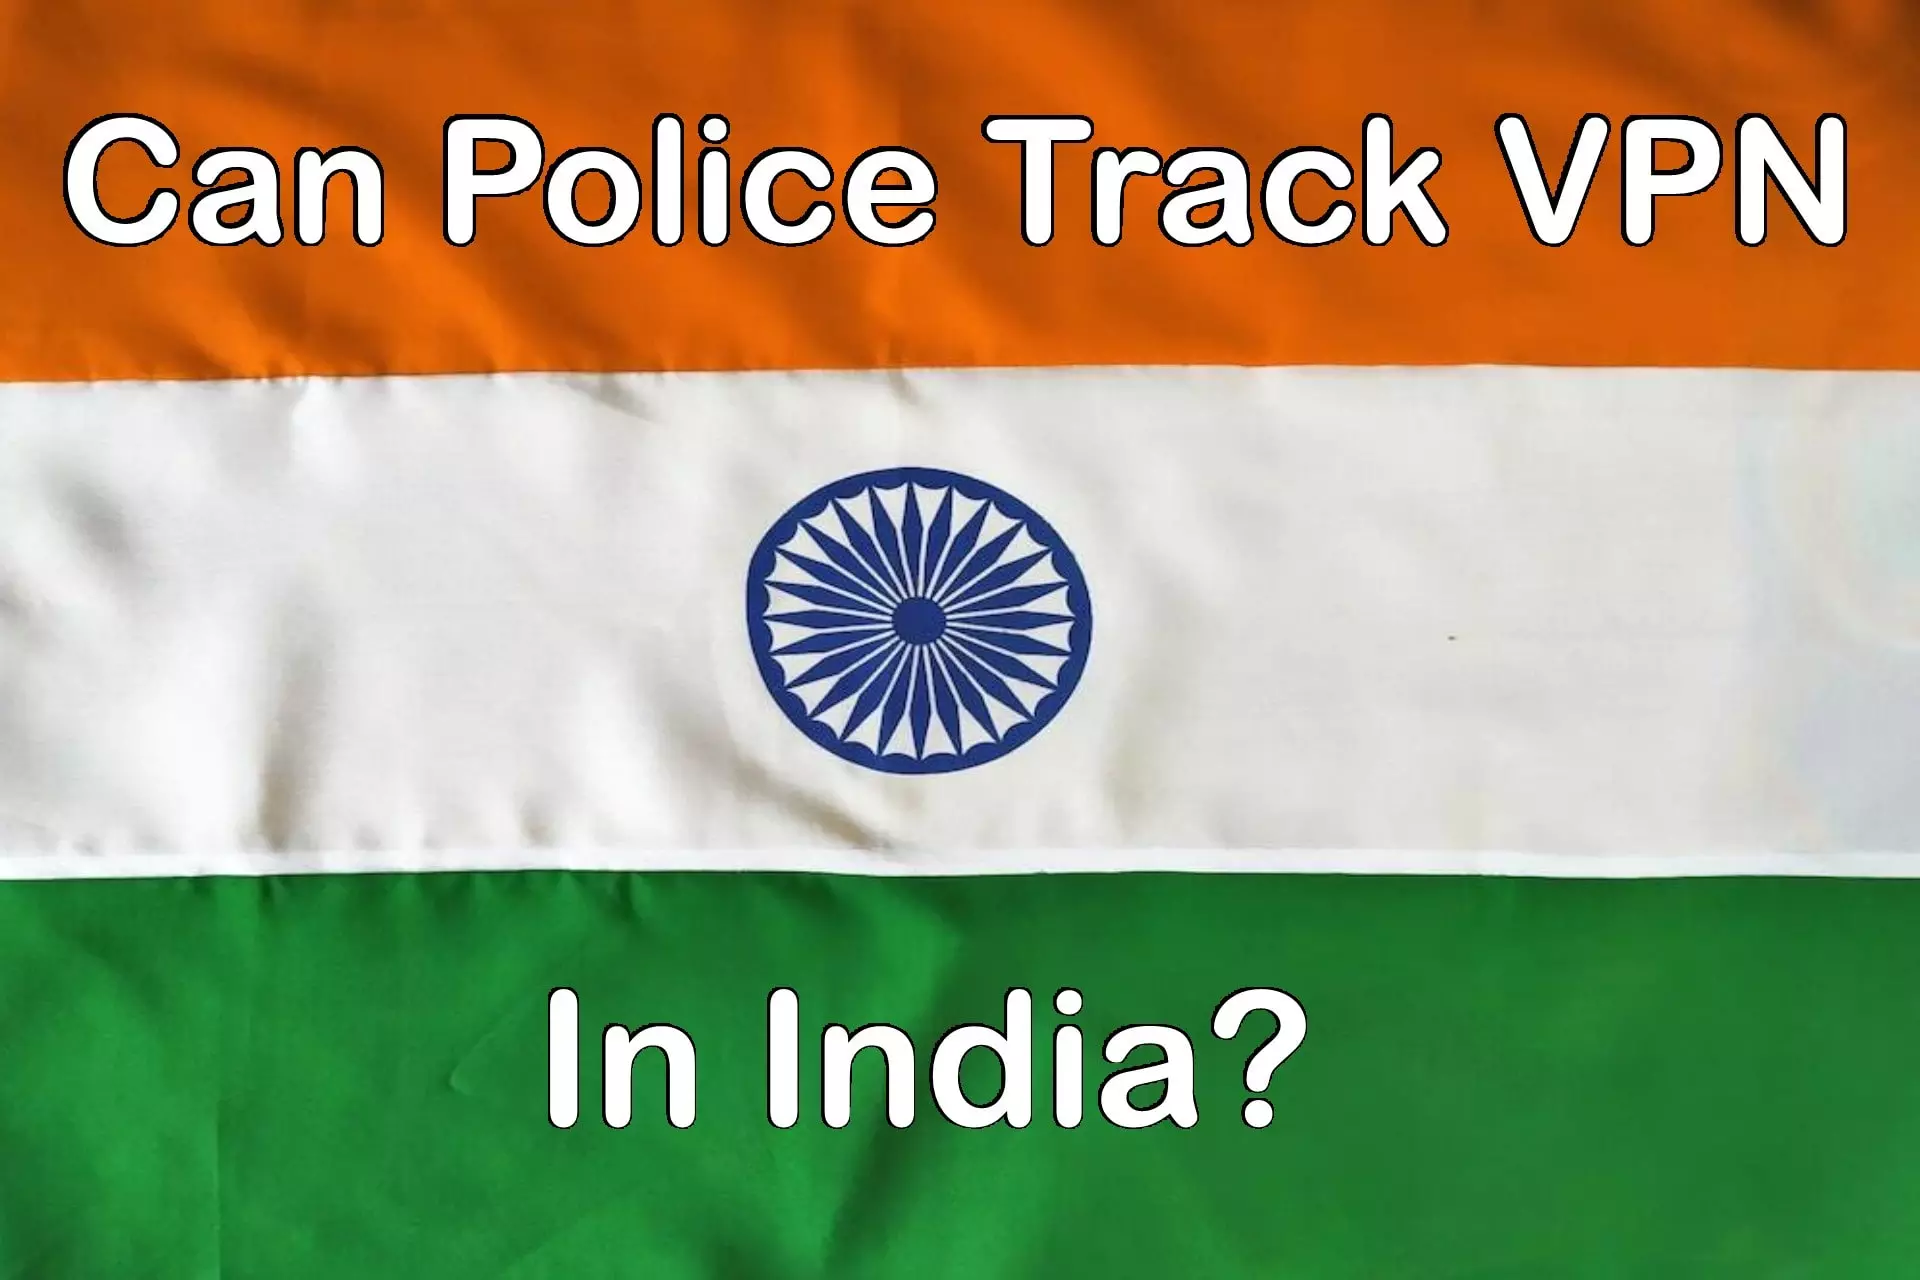 Can Police Track VPN in India?